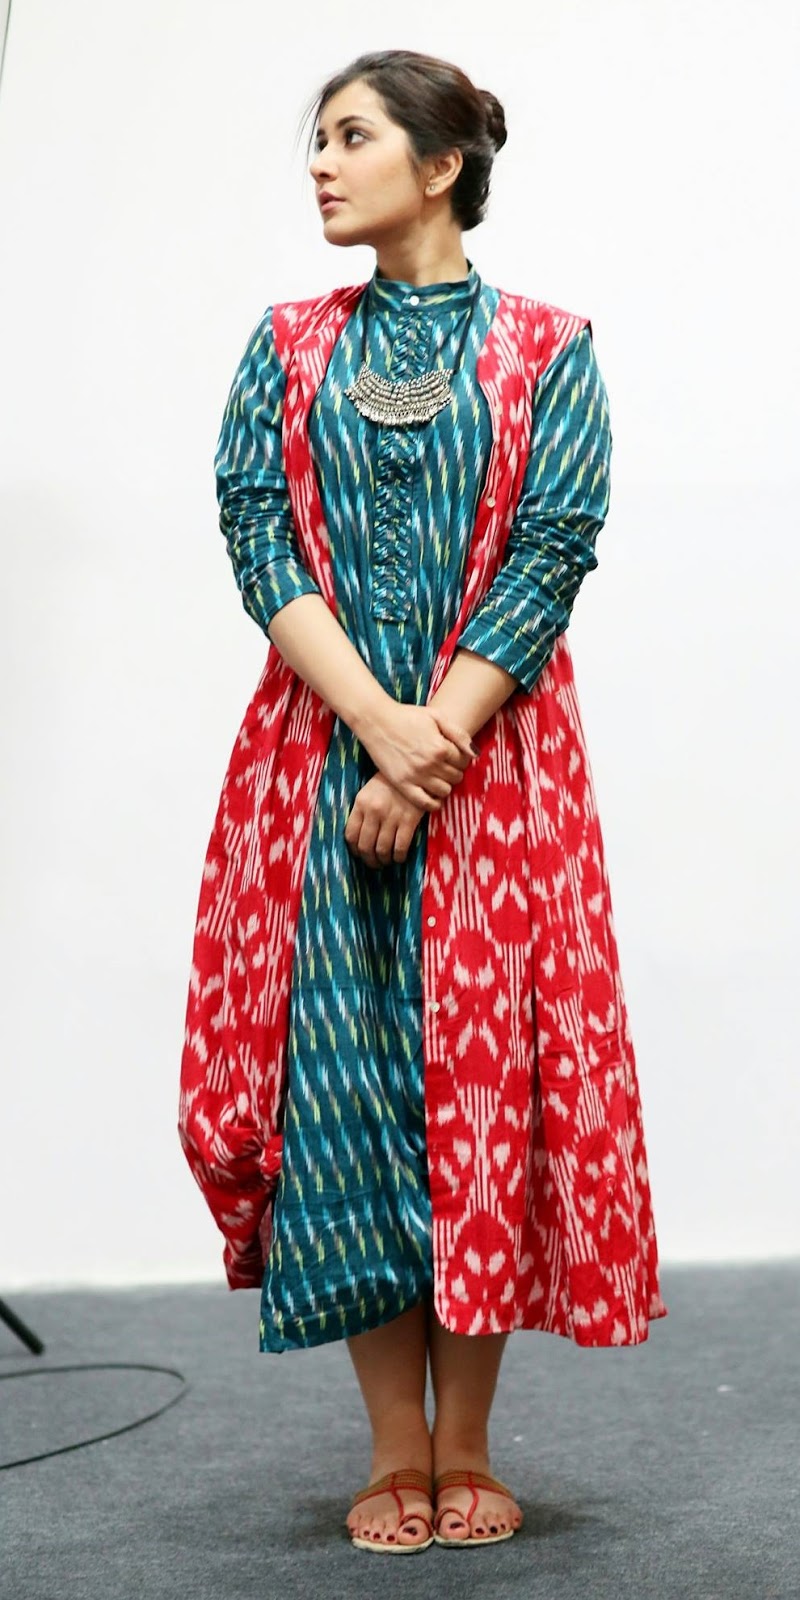 Hot Photoshoot Of Rashi Khanna In Red Dress